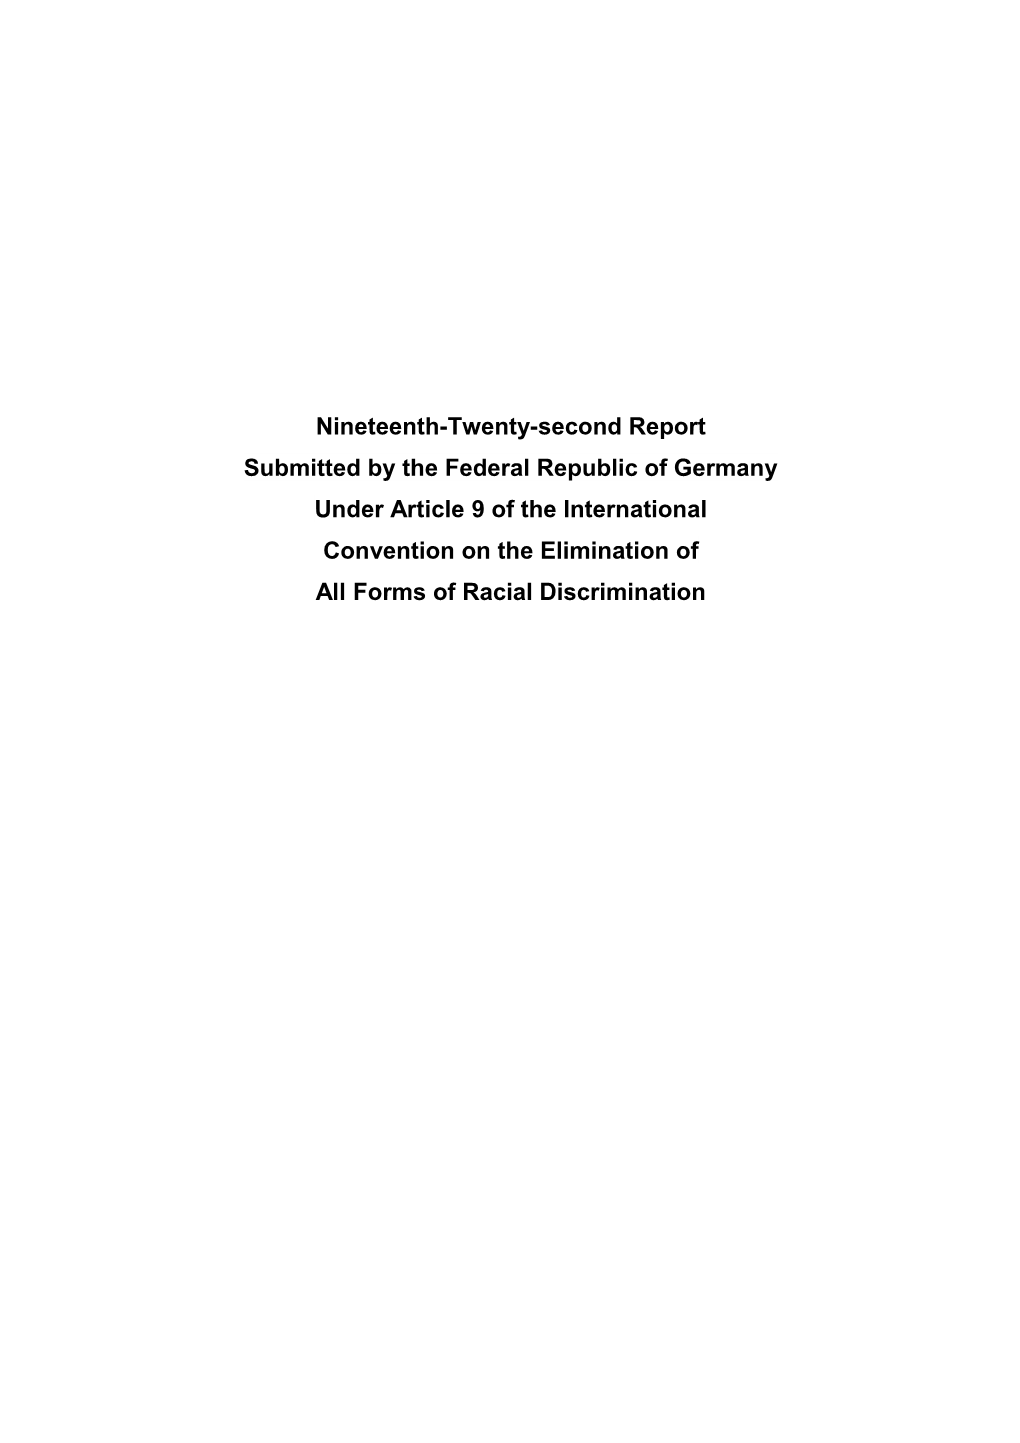 Nineteenth-Twenty-Second Report